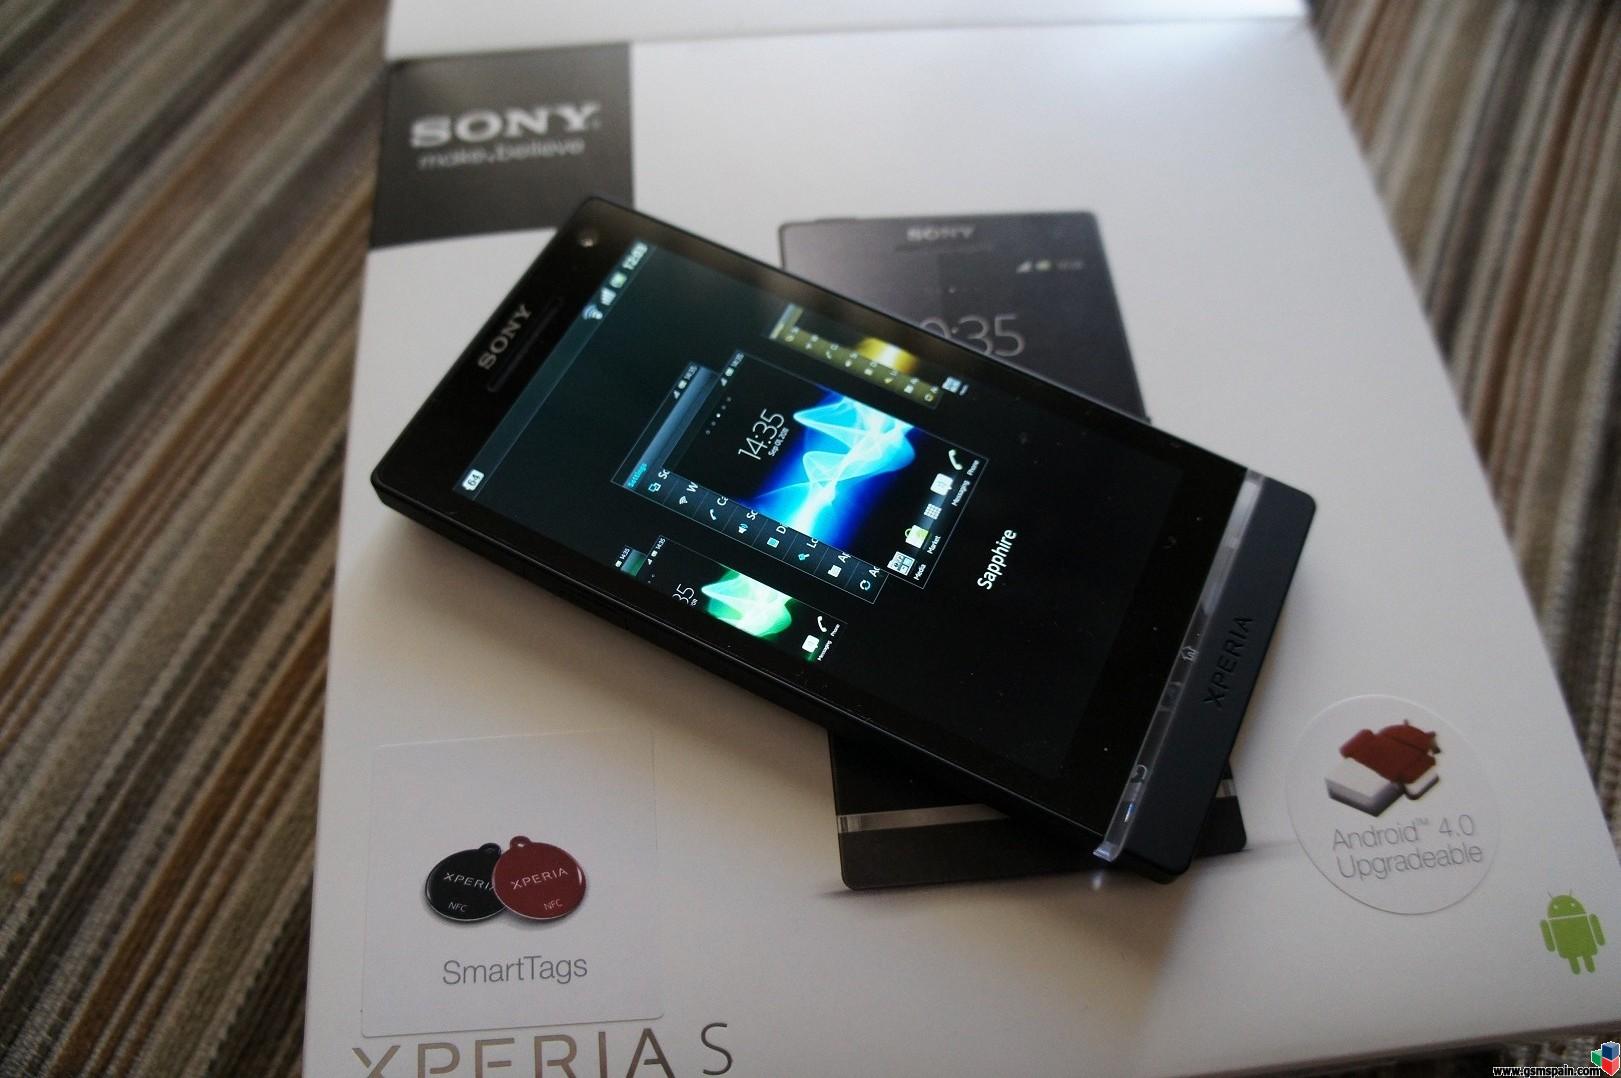 [REVIEW] Nuevo modelo Sony Xperia S 32 GB, Negro